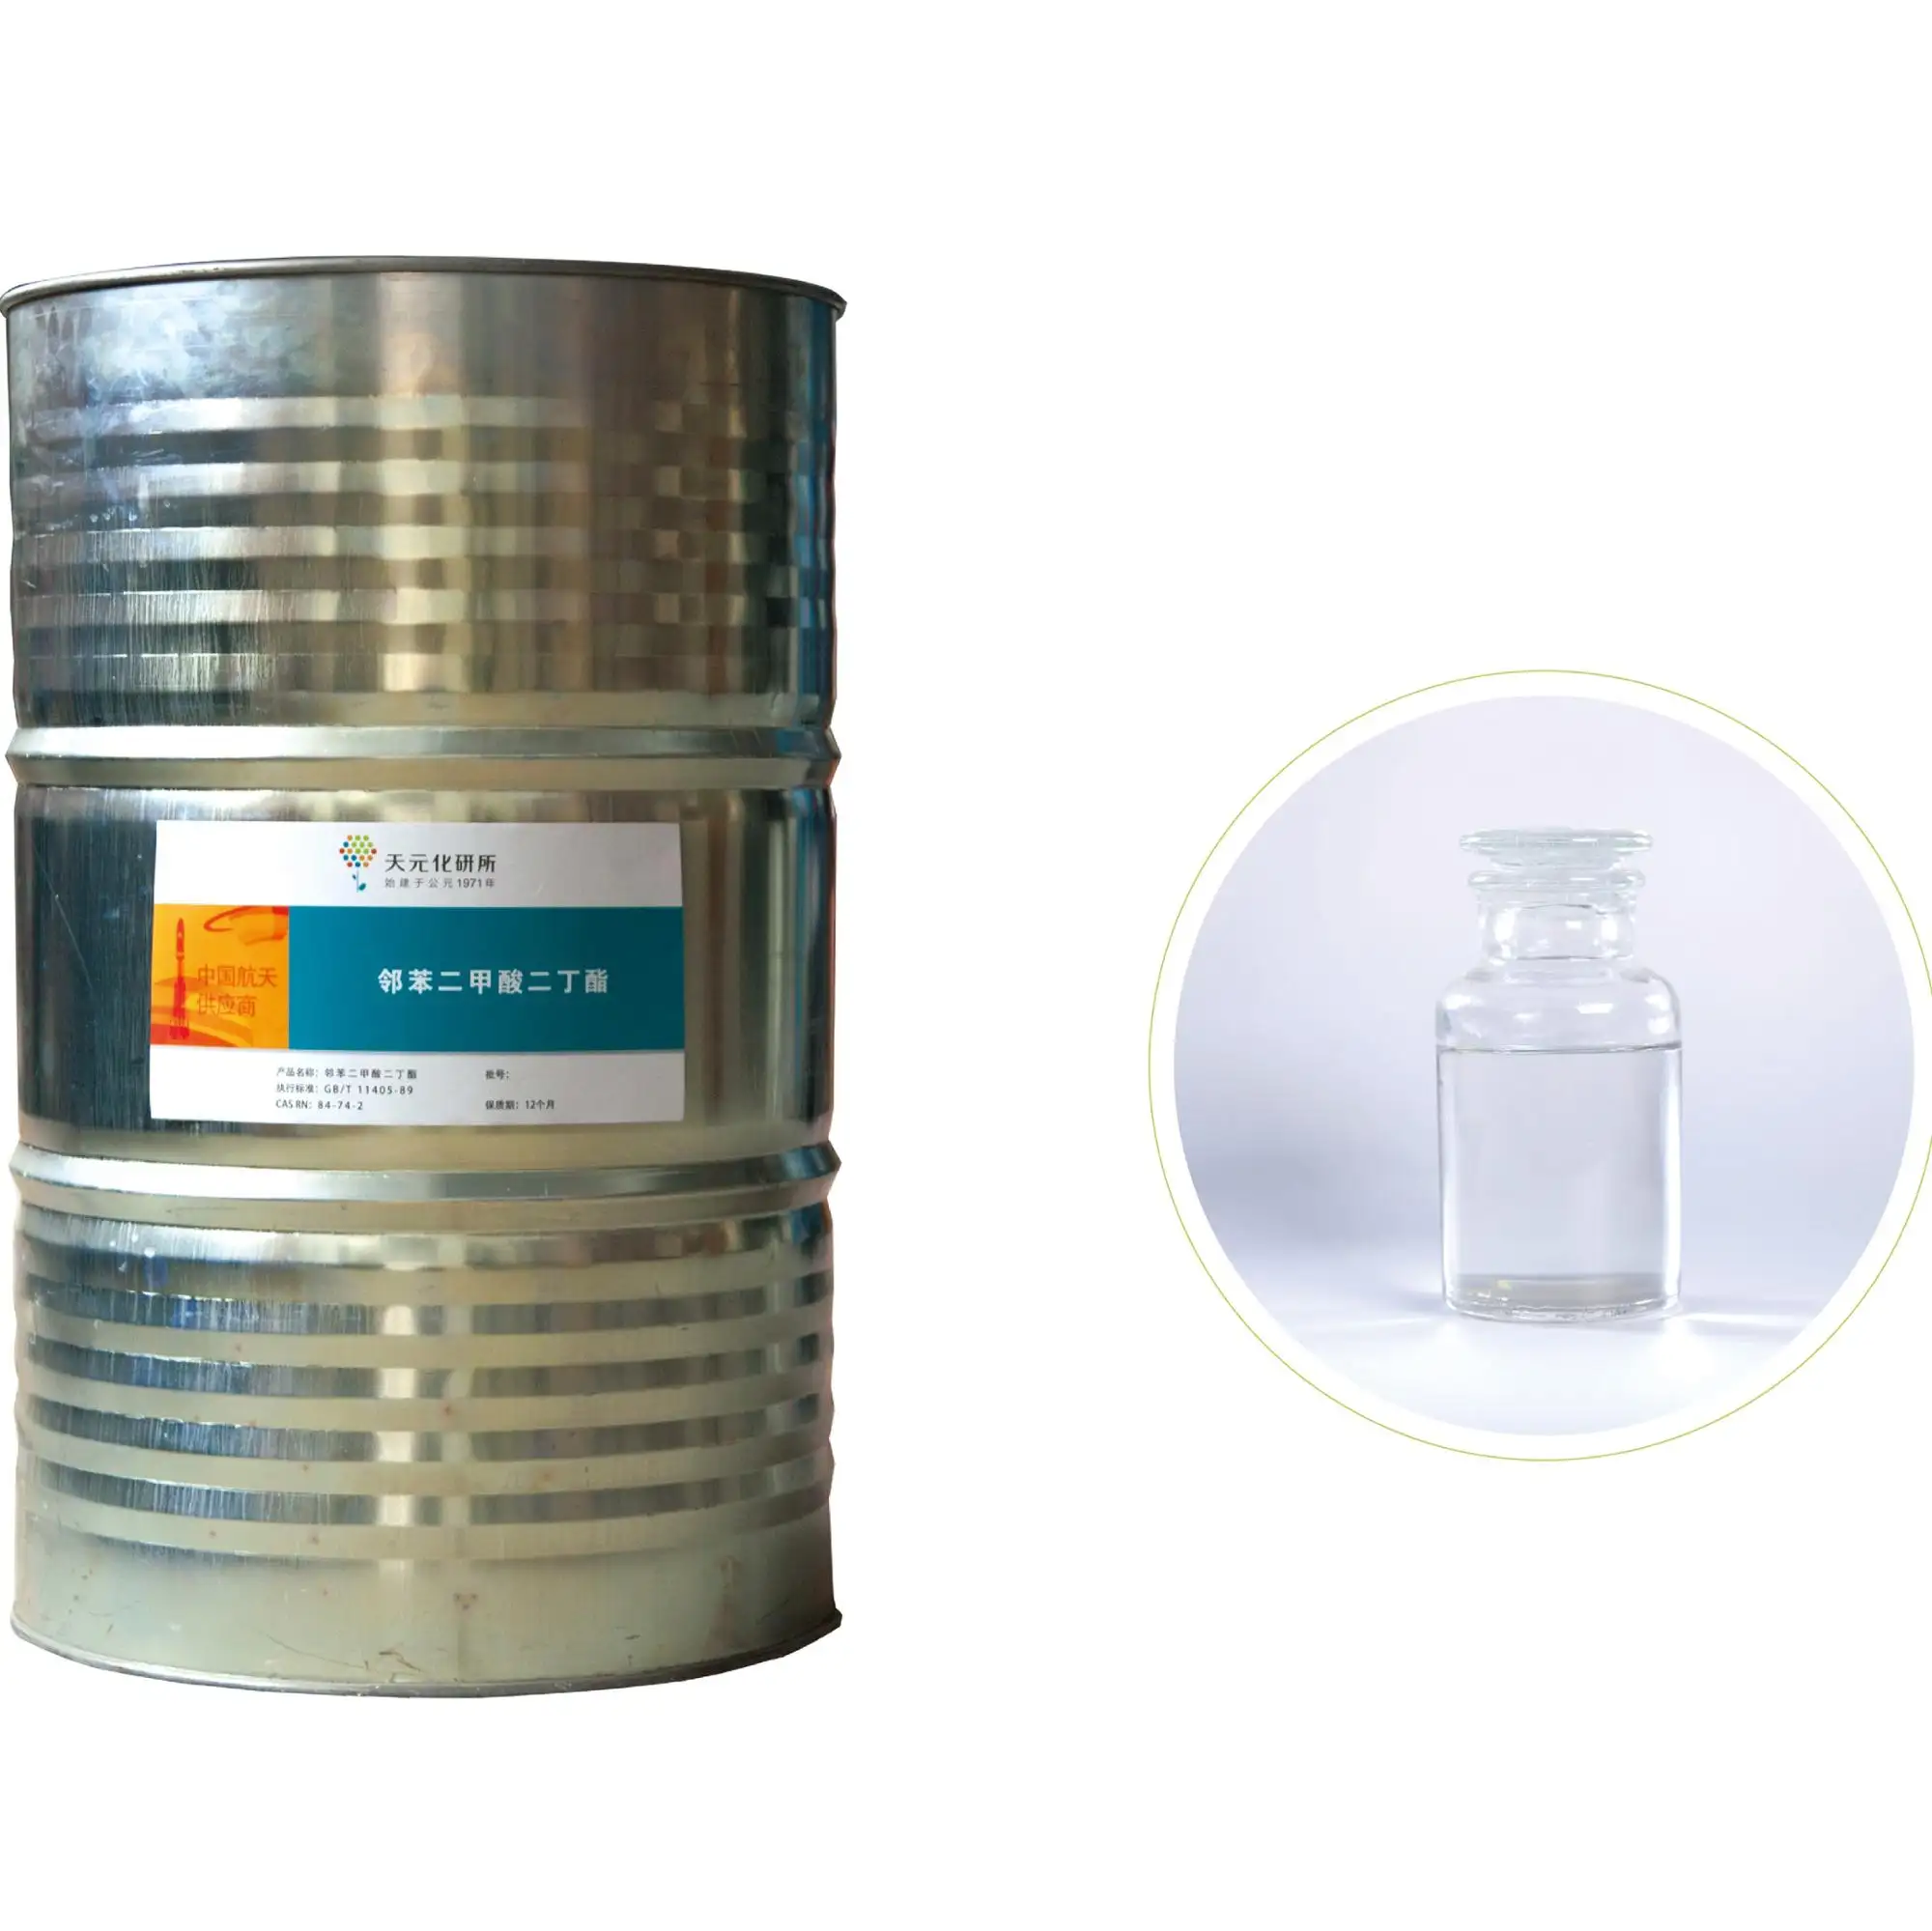 Hochwertiger flüssiger DBP-Dibutylphthalat-Weichmacher C16H22O4 aus PVC